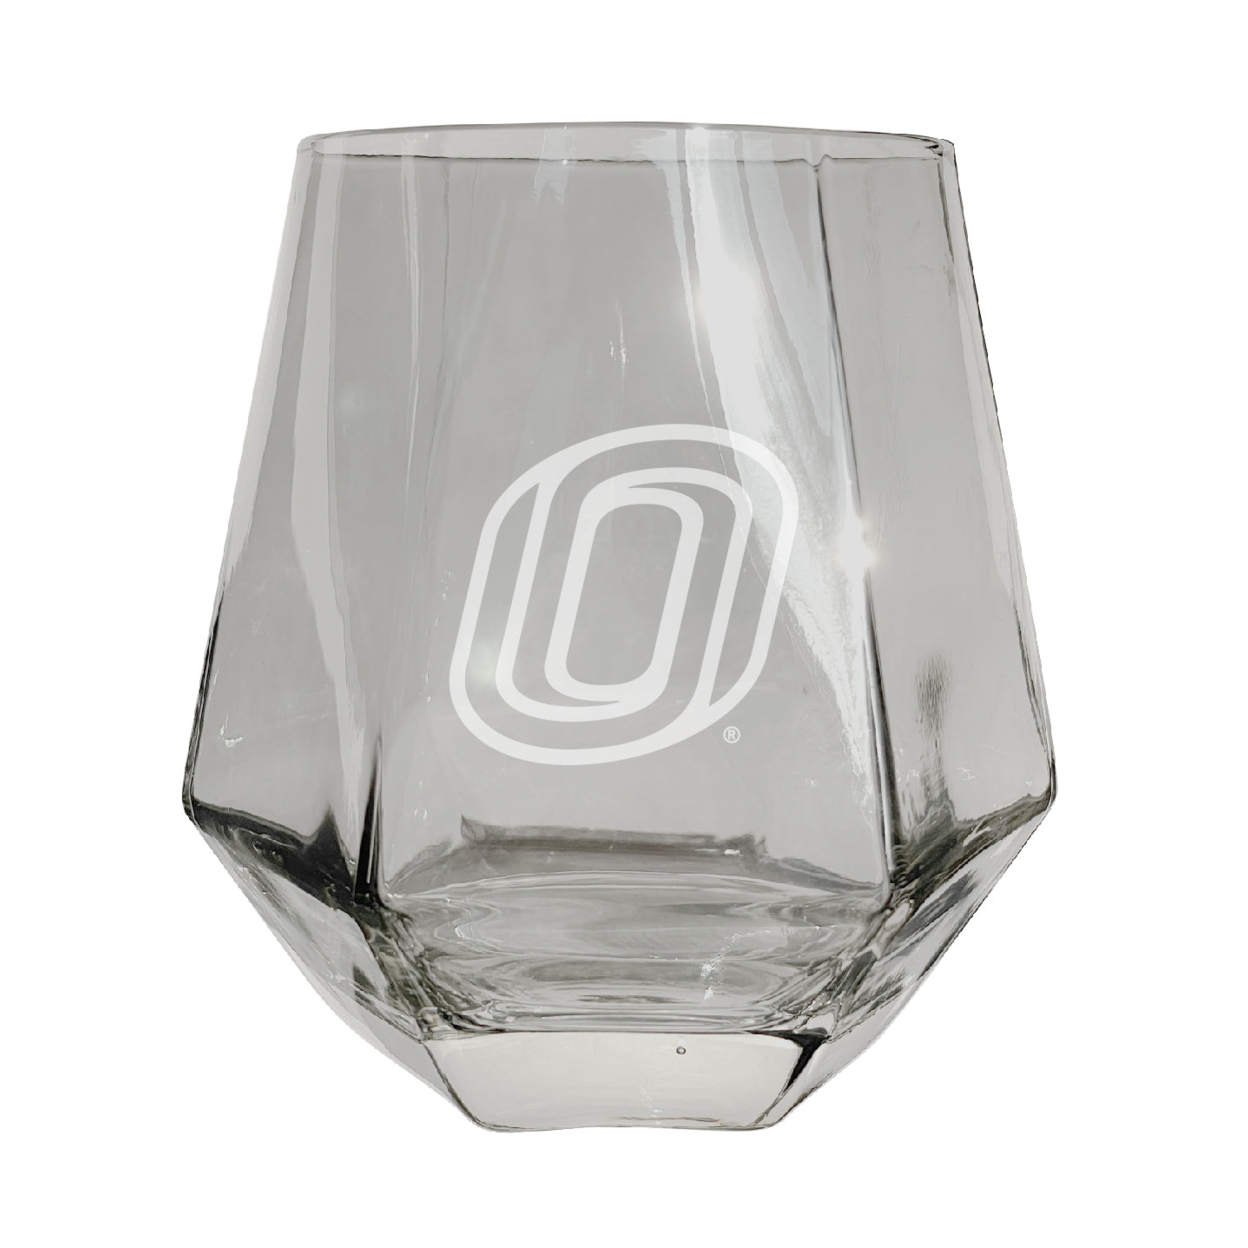 Nebraska At Omaha Etched Diamond Cut Stemless 10 Ounce Wine Glass Clear